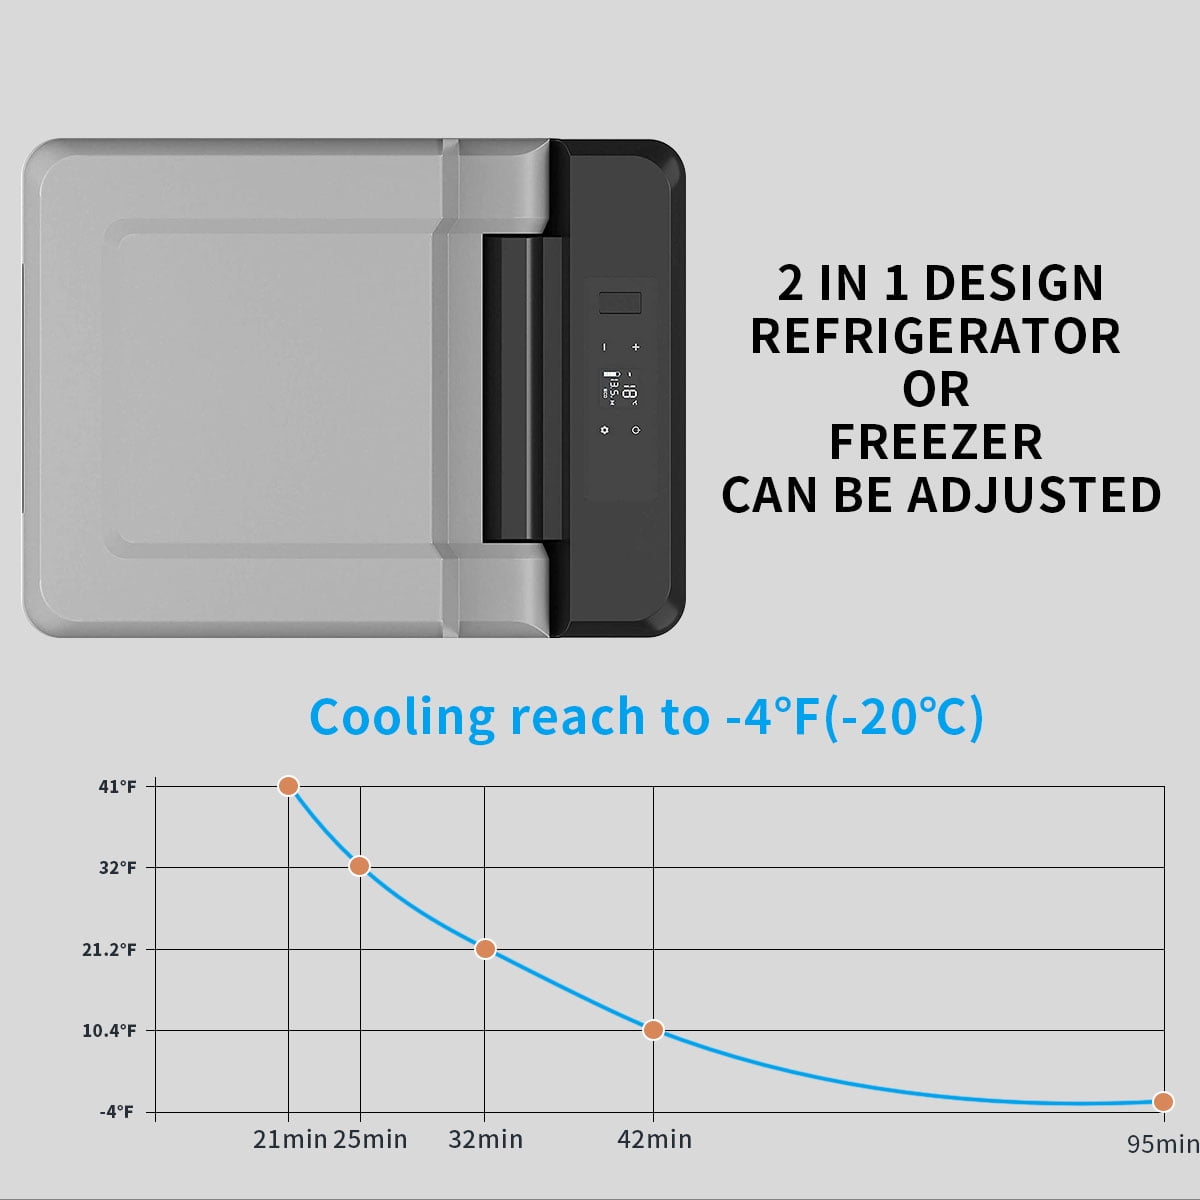 Alpicool Portable Refrigerator 21 Quart20 Liter India